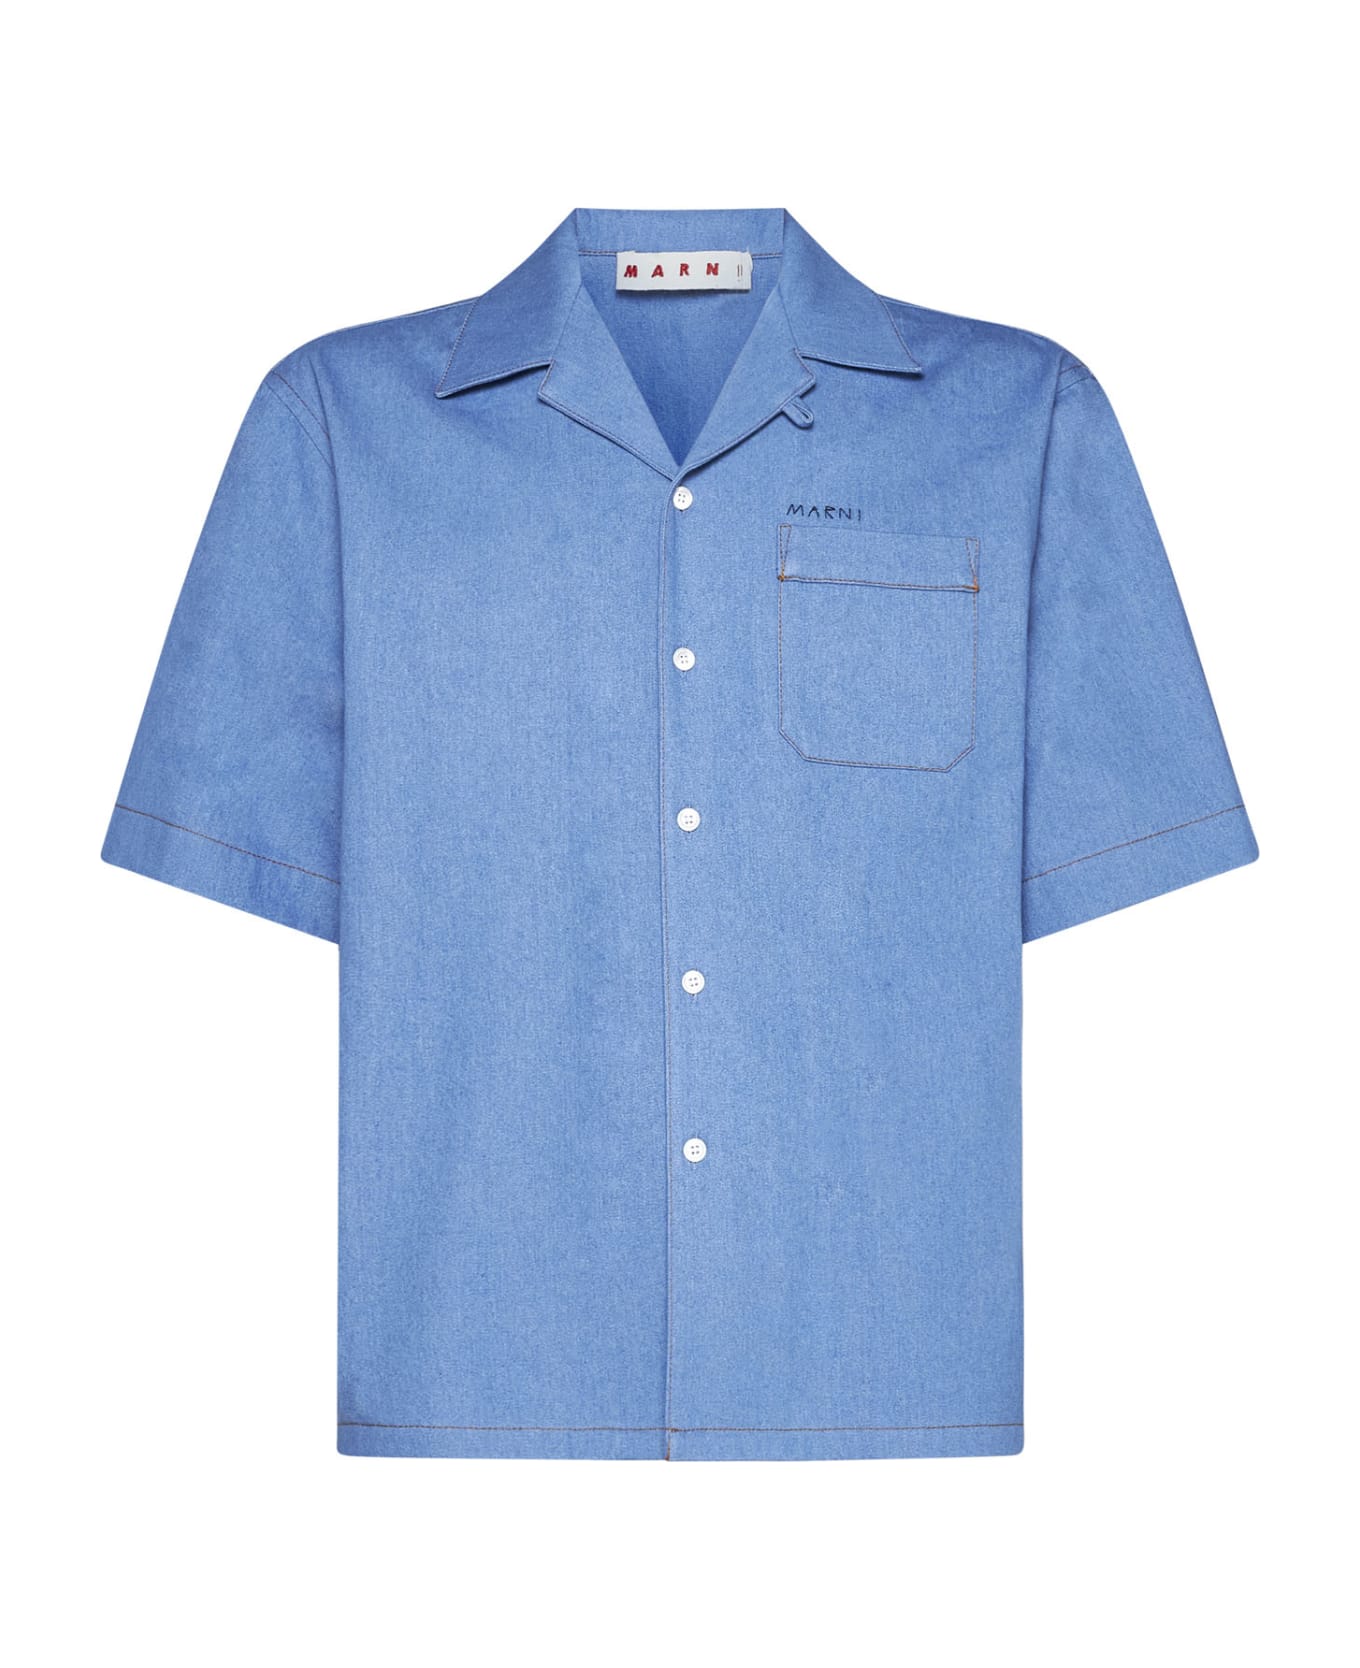 Marni Shirt S/s - Azure